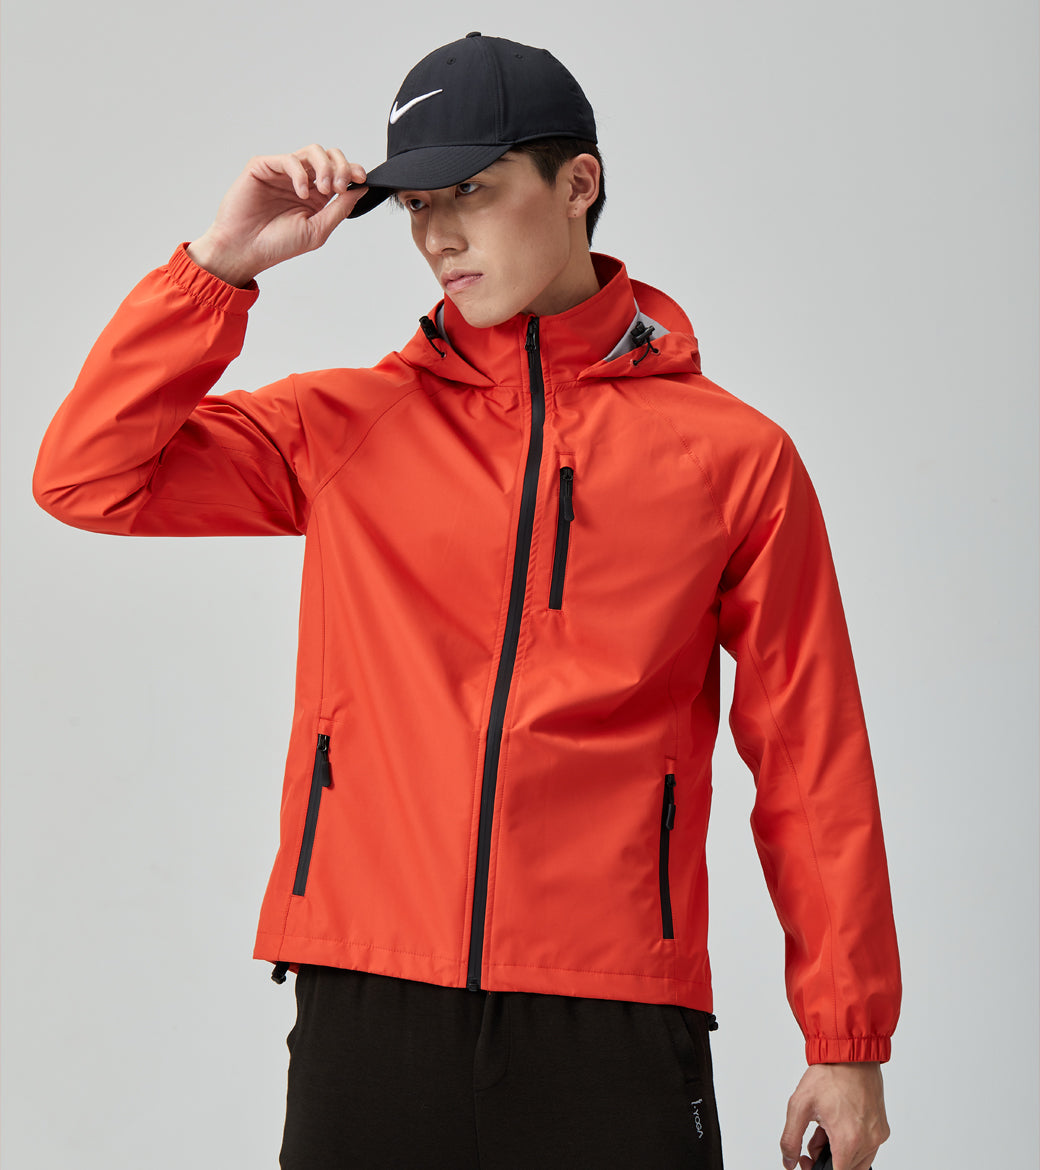 LOVESOFT Men's Orange Outdoor Jacket Waterproof Windproof Warm Jacket